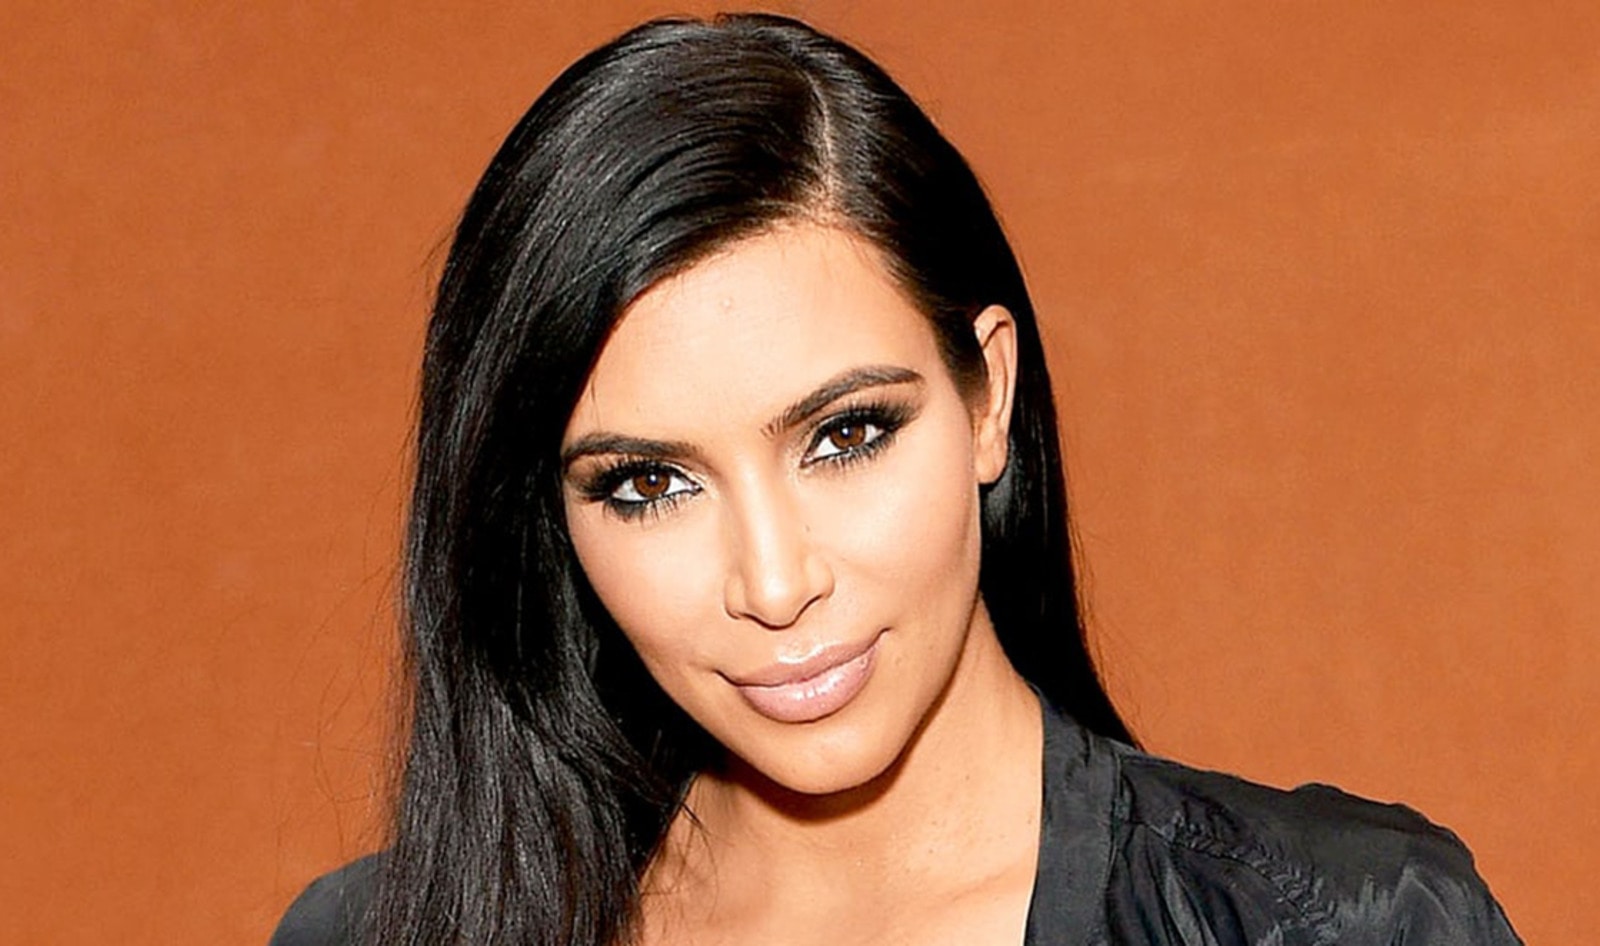 Vegan Fur is Kim Kardashian’s "New Thing”